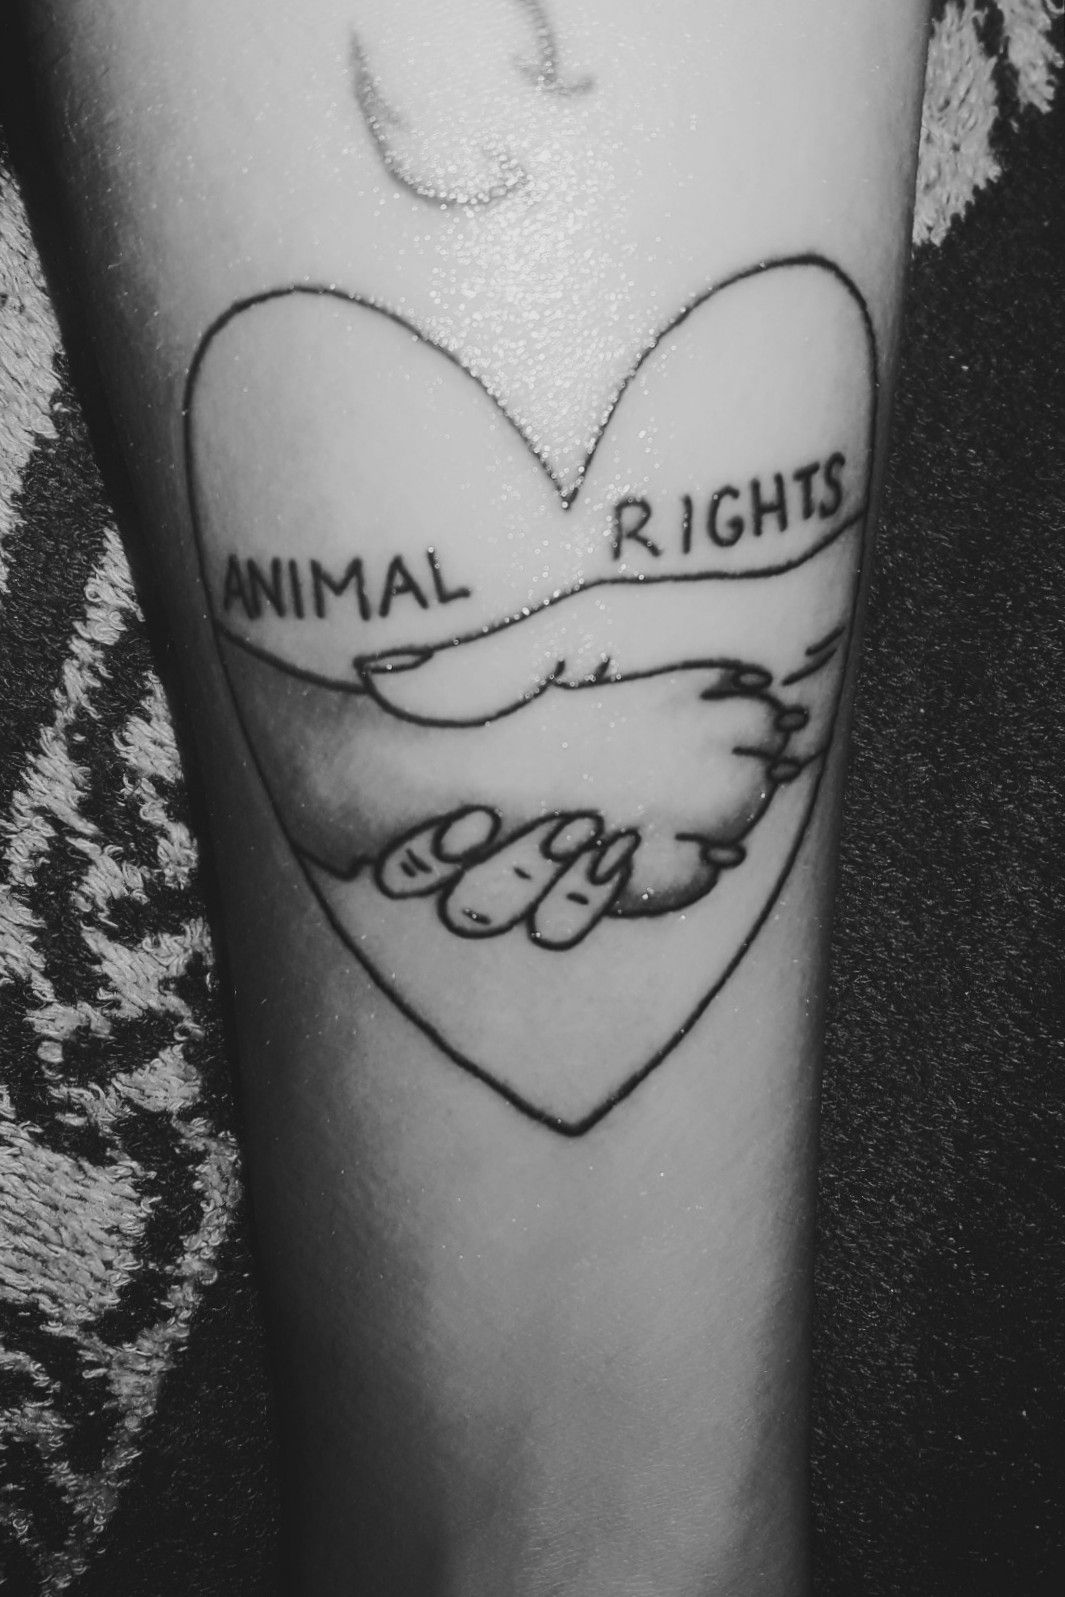 Singer Mobys Huge Animal Rights Tattoos get darker and bolder  Totally  Vegan Buzz